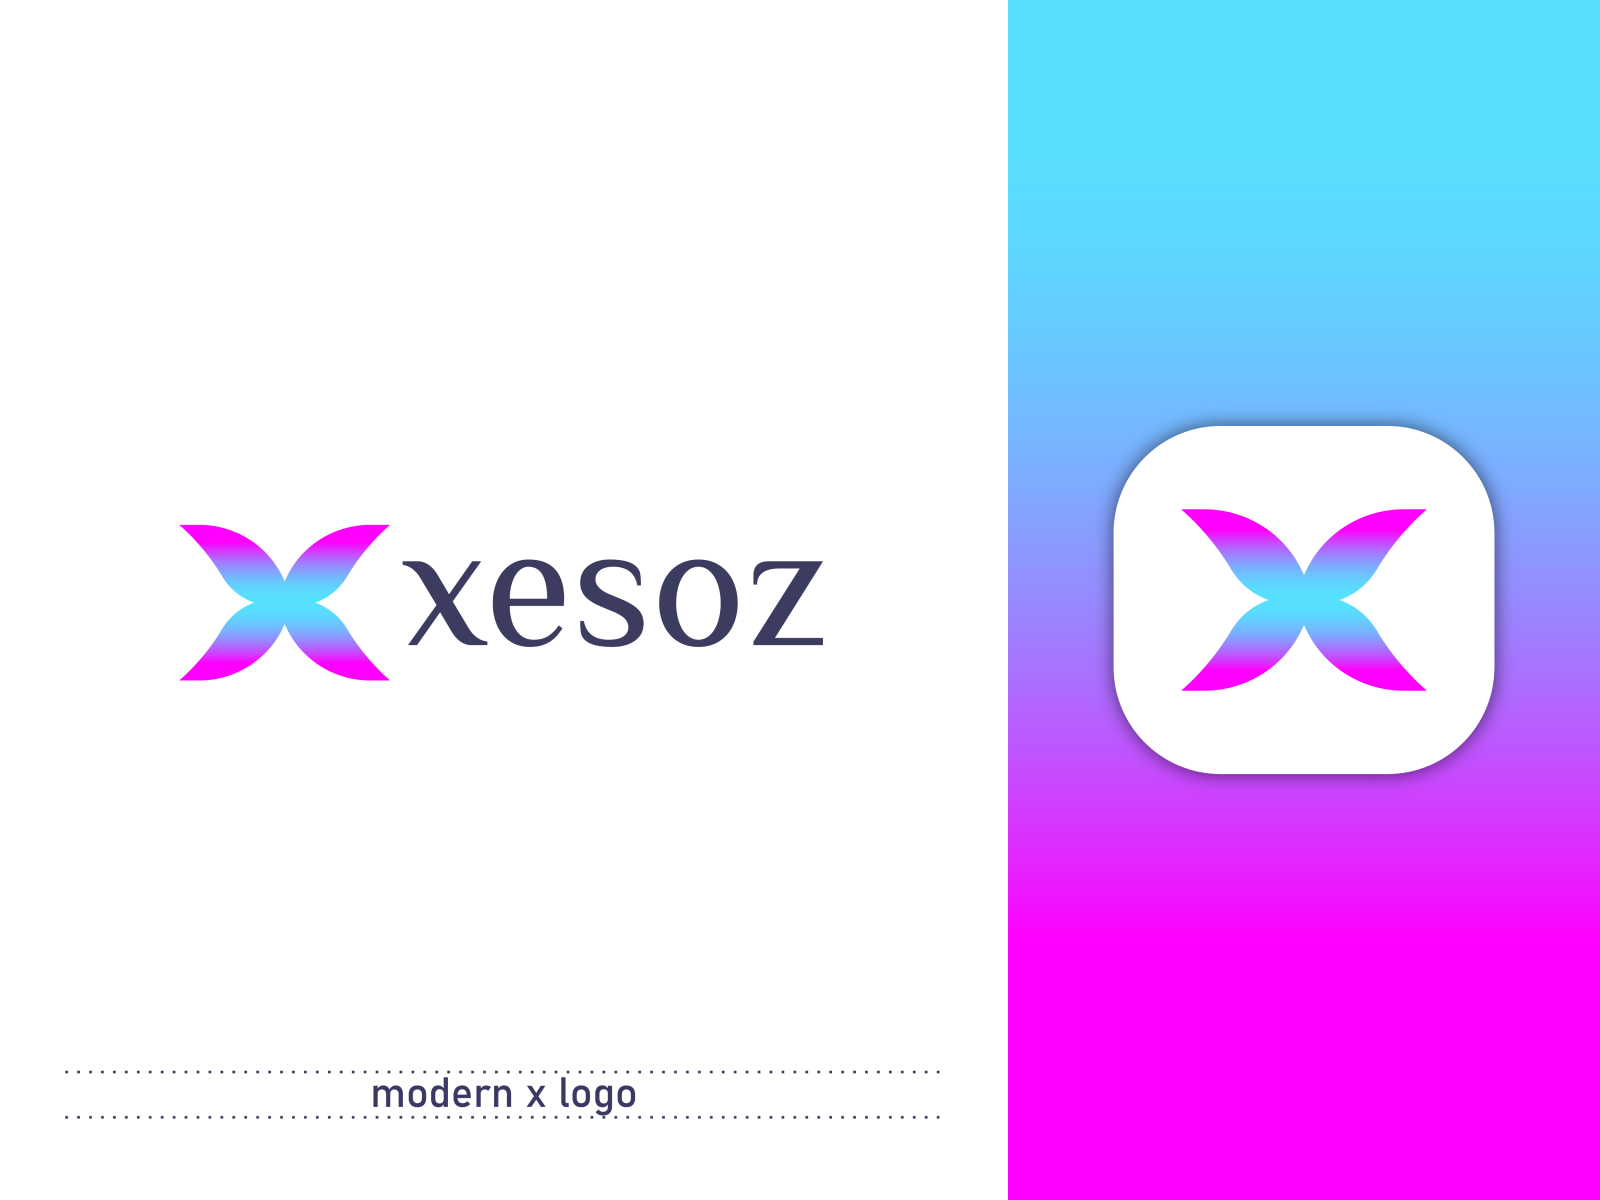 modern x logo | branding by Masum Billah on Dribbble